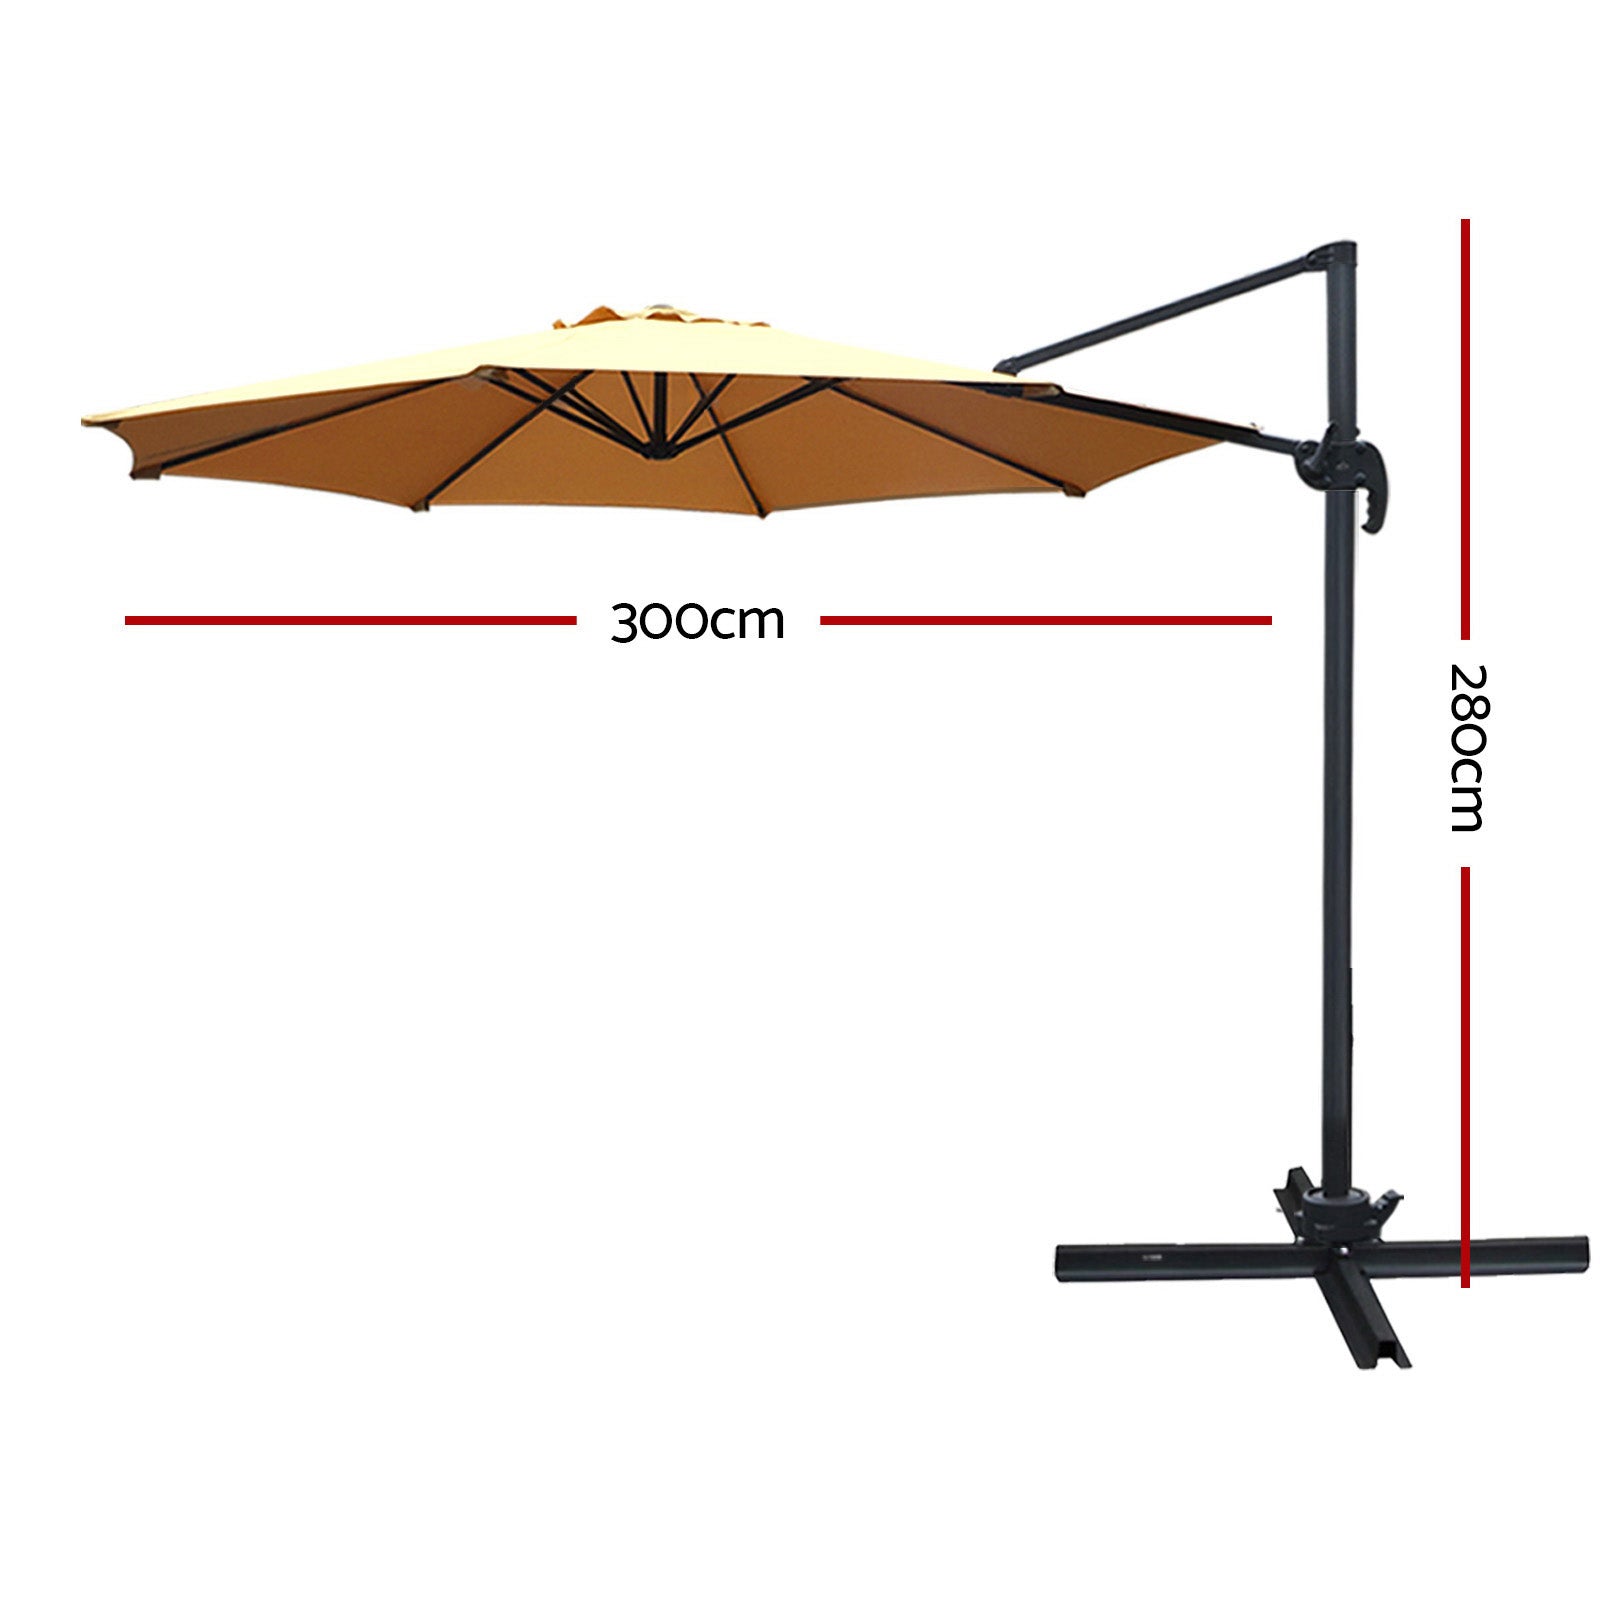 Instahut 3m Outdoor Umbrella Cantilever 360 Degree Tilt Beach Roma Beige